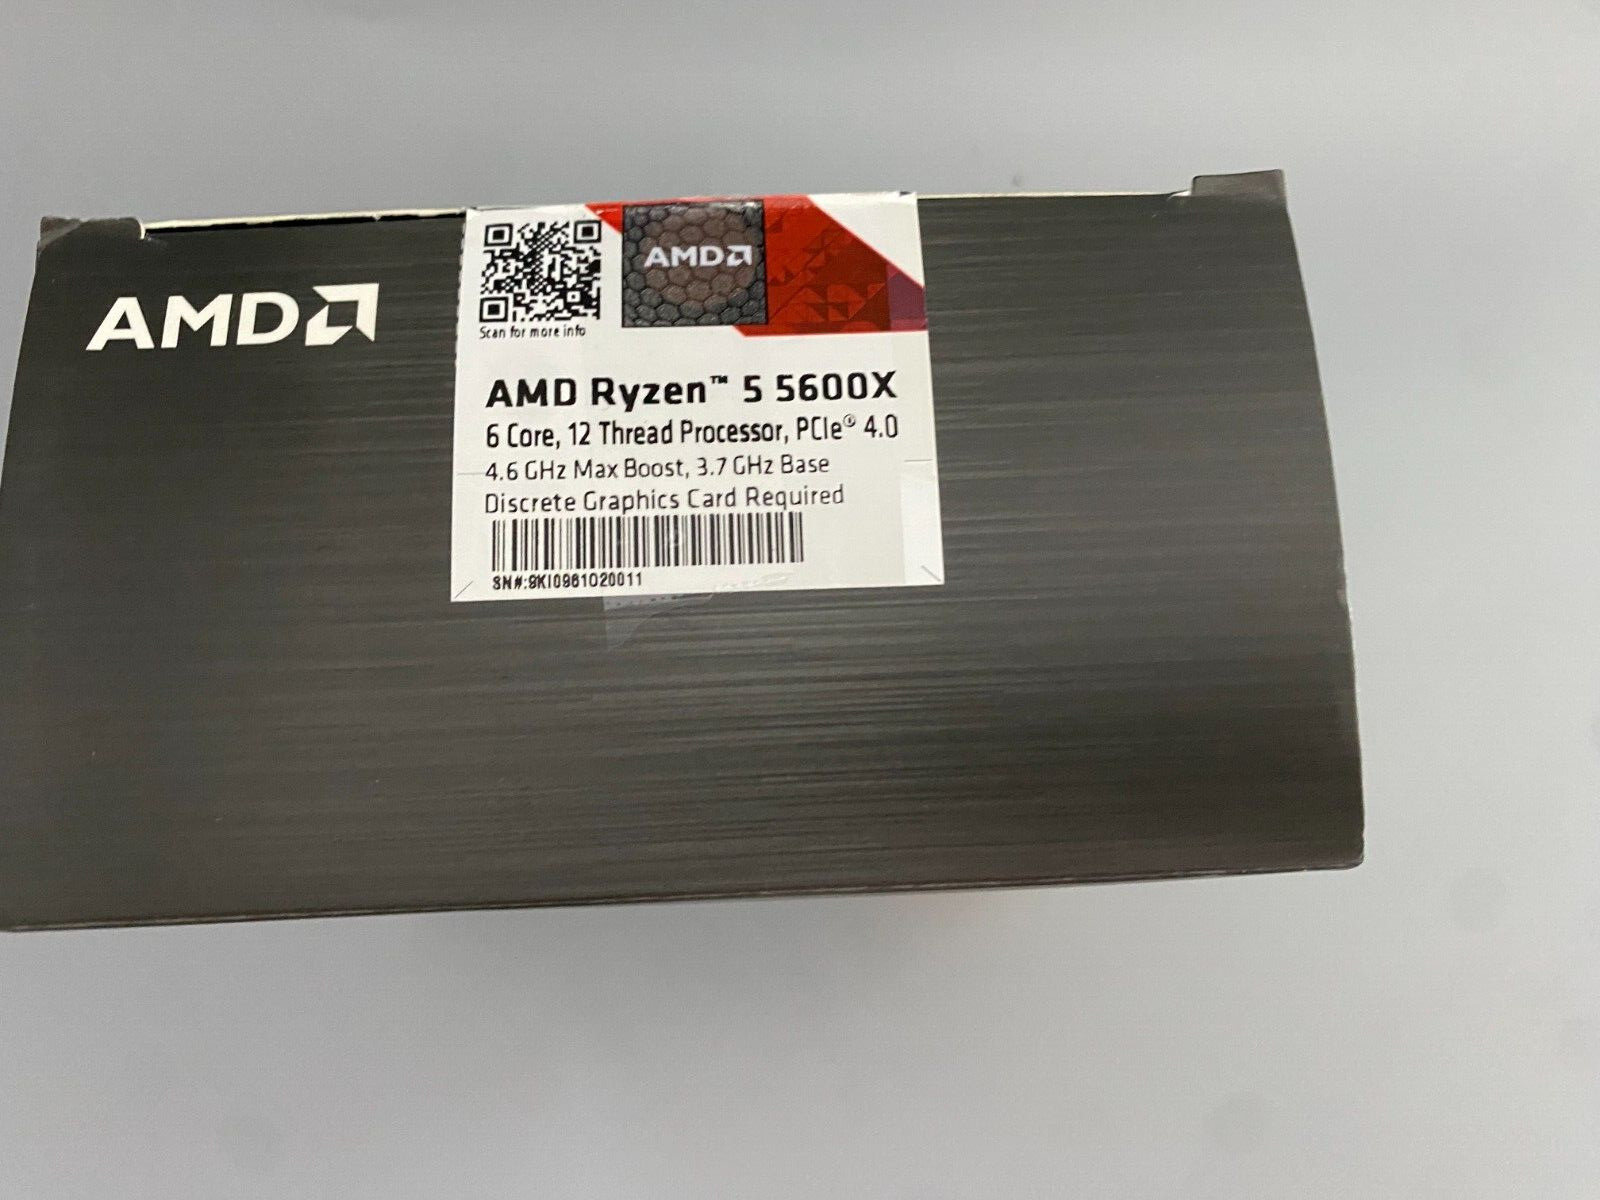 AMD Ryzen 5 5600X Desktop Processor (4.6GHz, 6 Cores, Socket AM4) Open Box